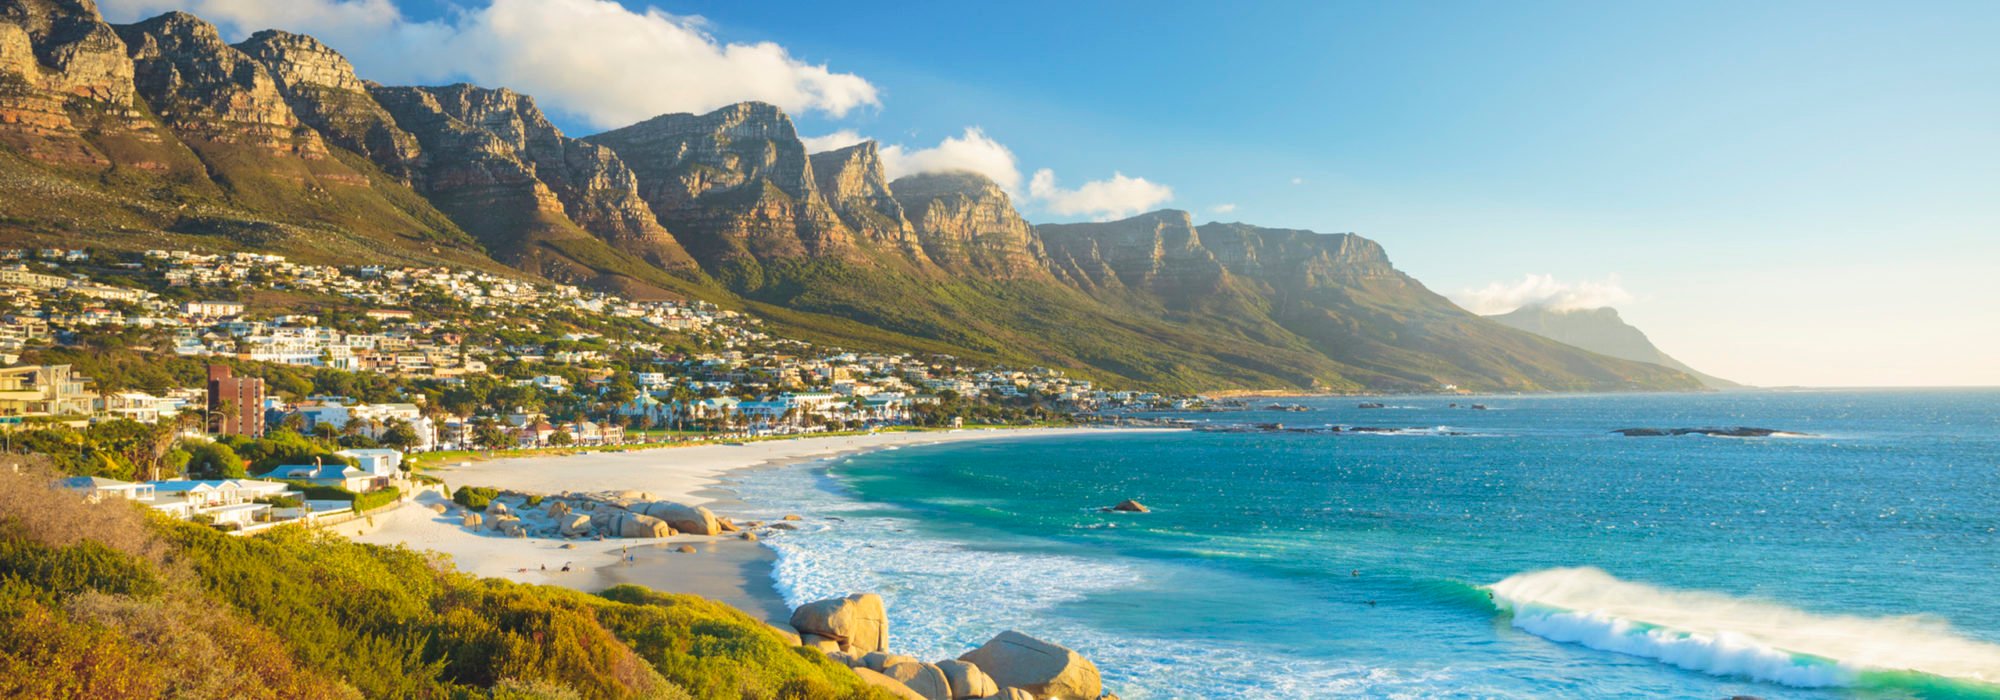 Cape Town travel agents packages deals